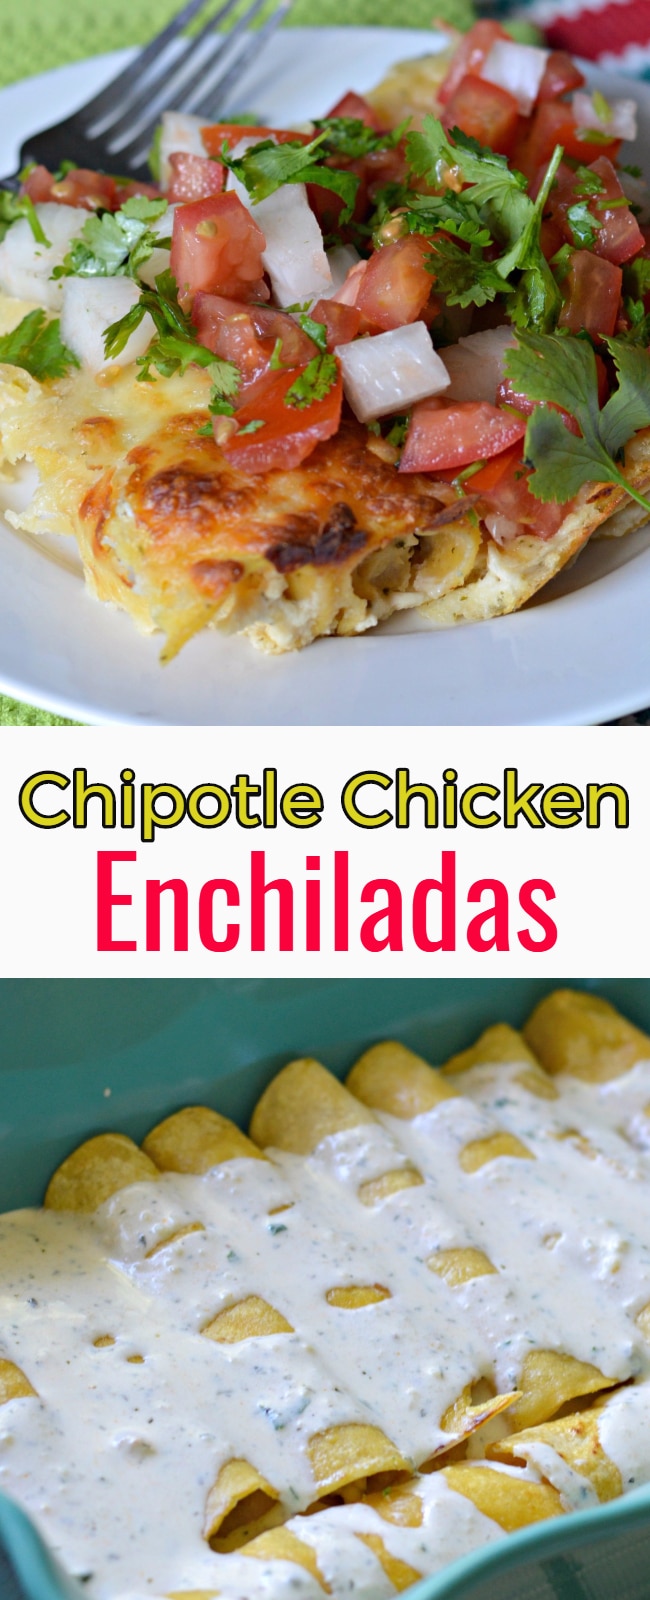 Chipotle Chicken Enchiladas with Pico De Gallo - My Latina Table